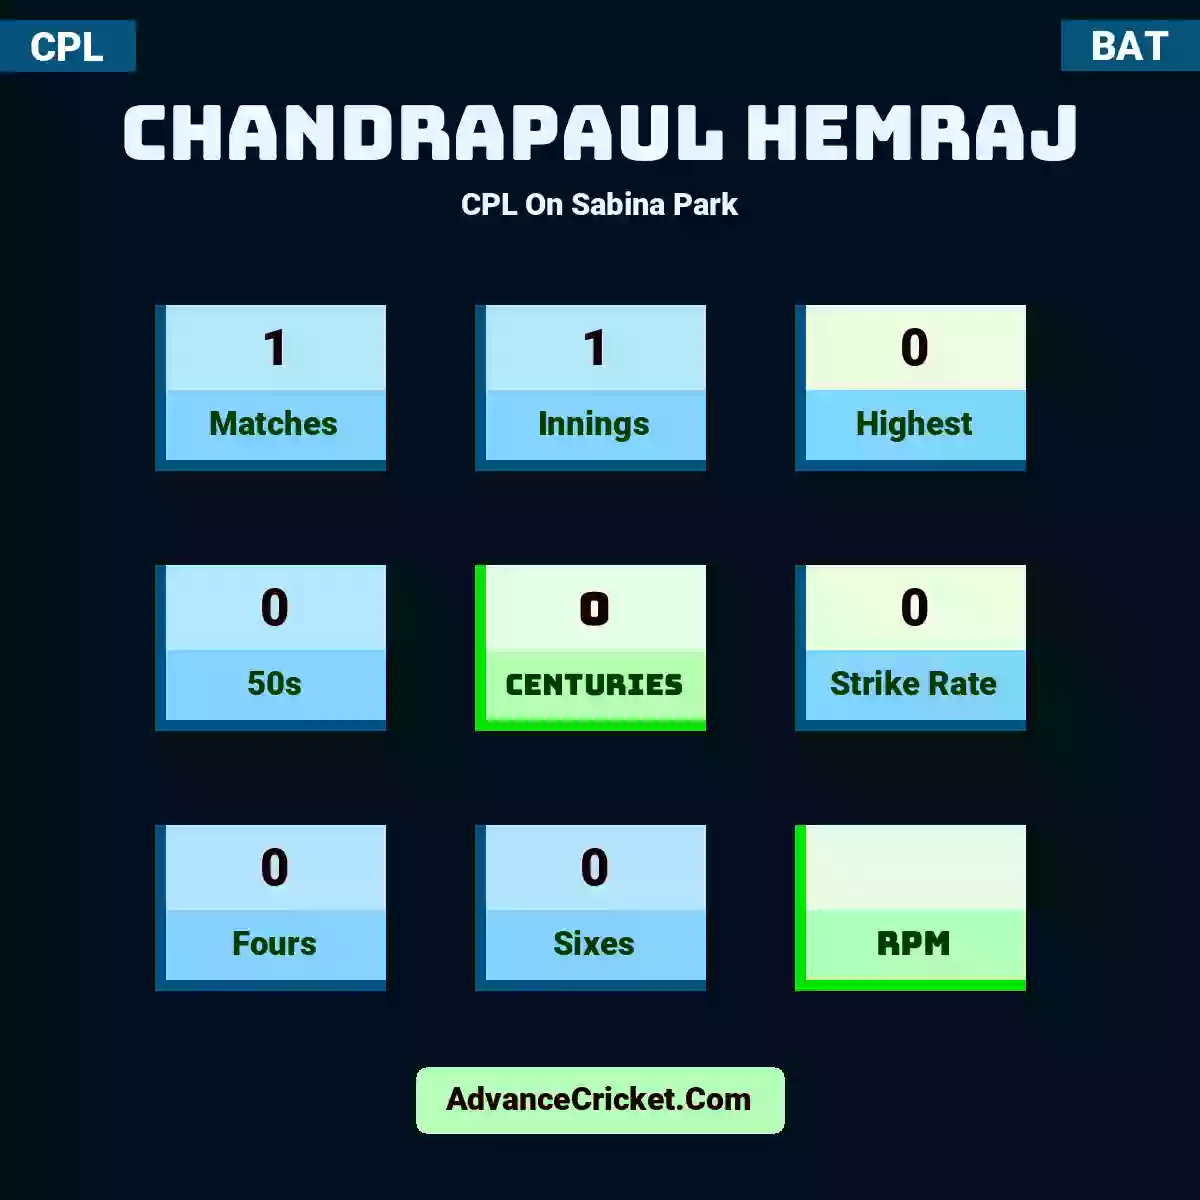 Chandrapaul Hemraj CPL  On Sabina Park, Chandrapaul Hemraj played 1 matches, scored 0 runs as highest, 0 half-centuries, and 0 centuries, with a strike rate of 0. C.Hemraj hit 0 fours and 0 sixes.